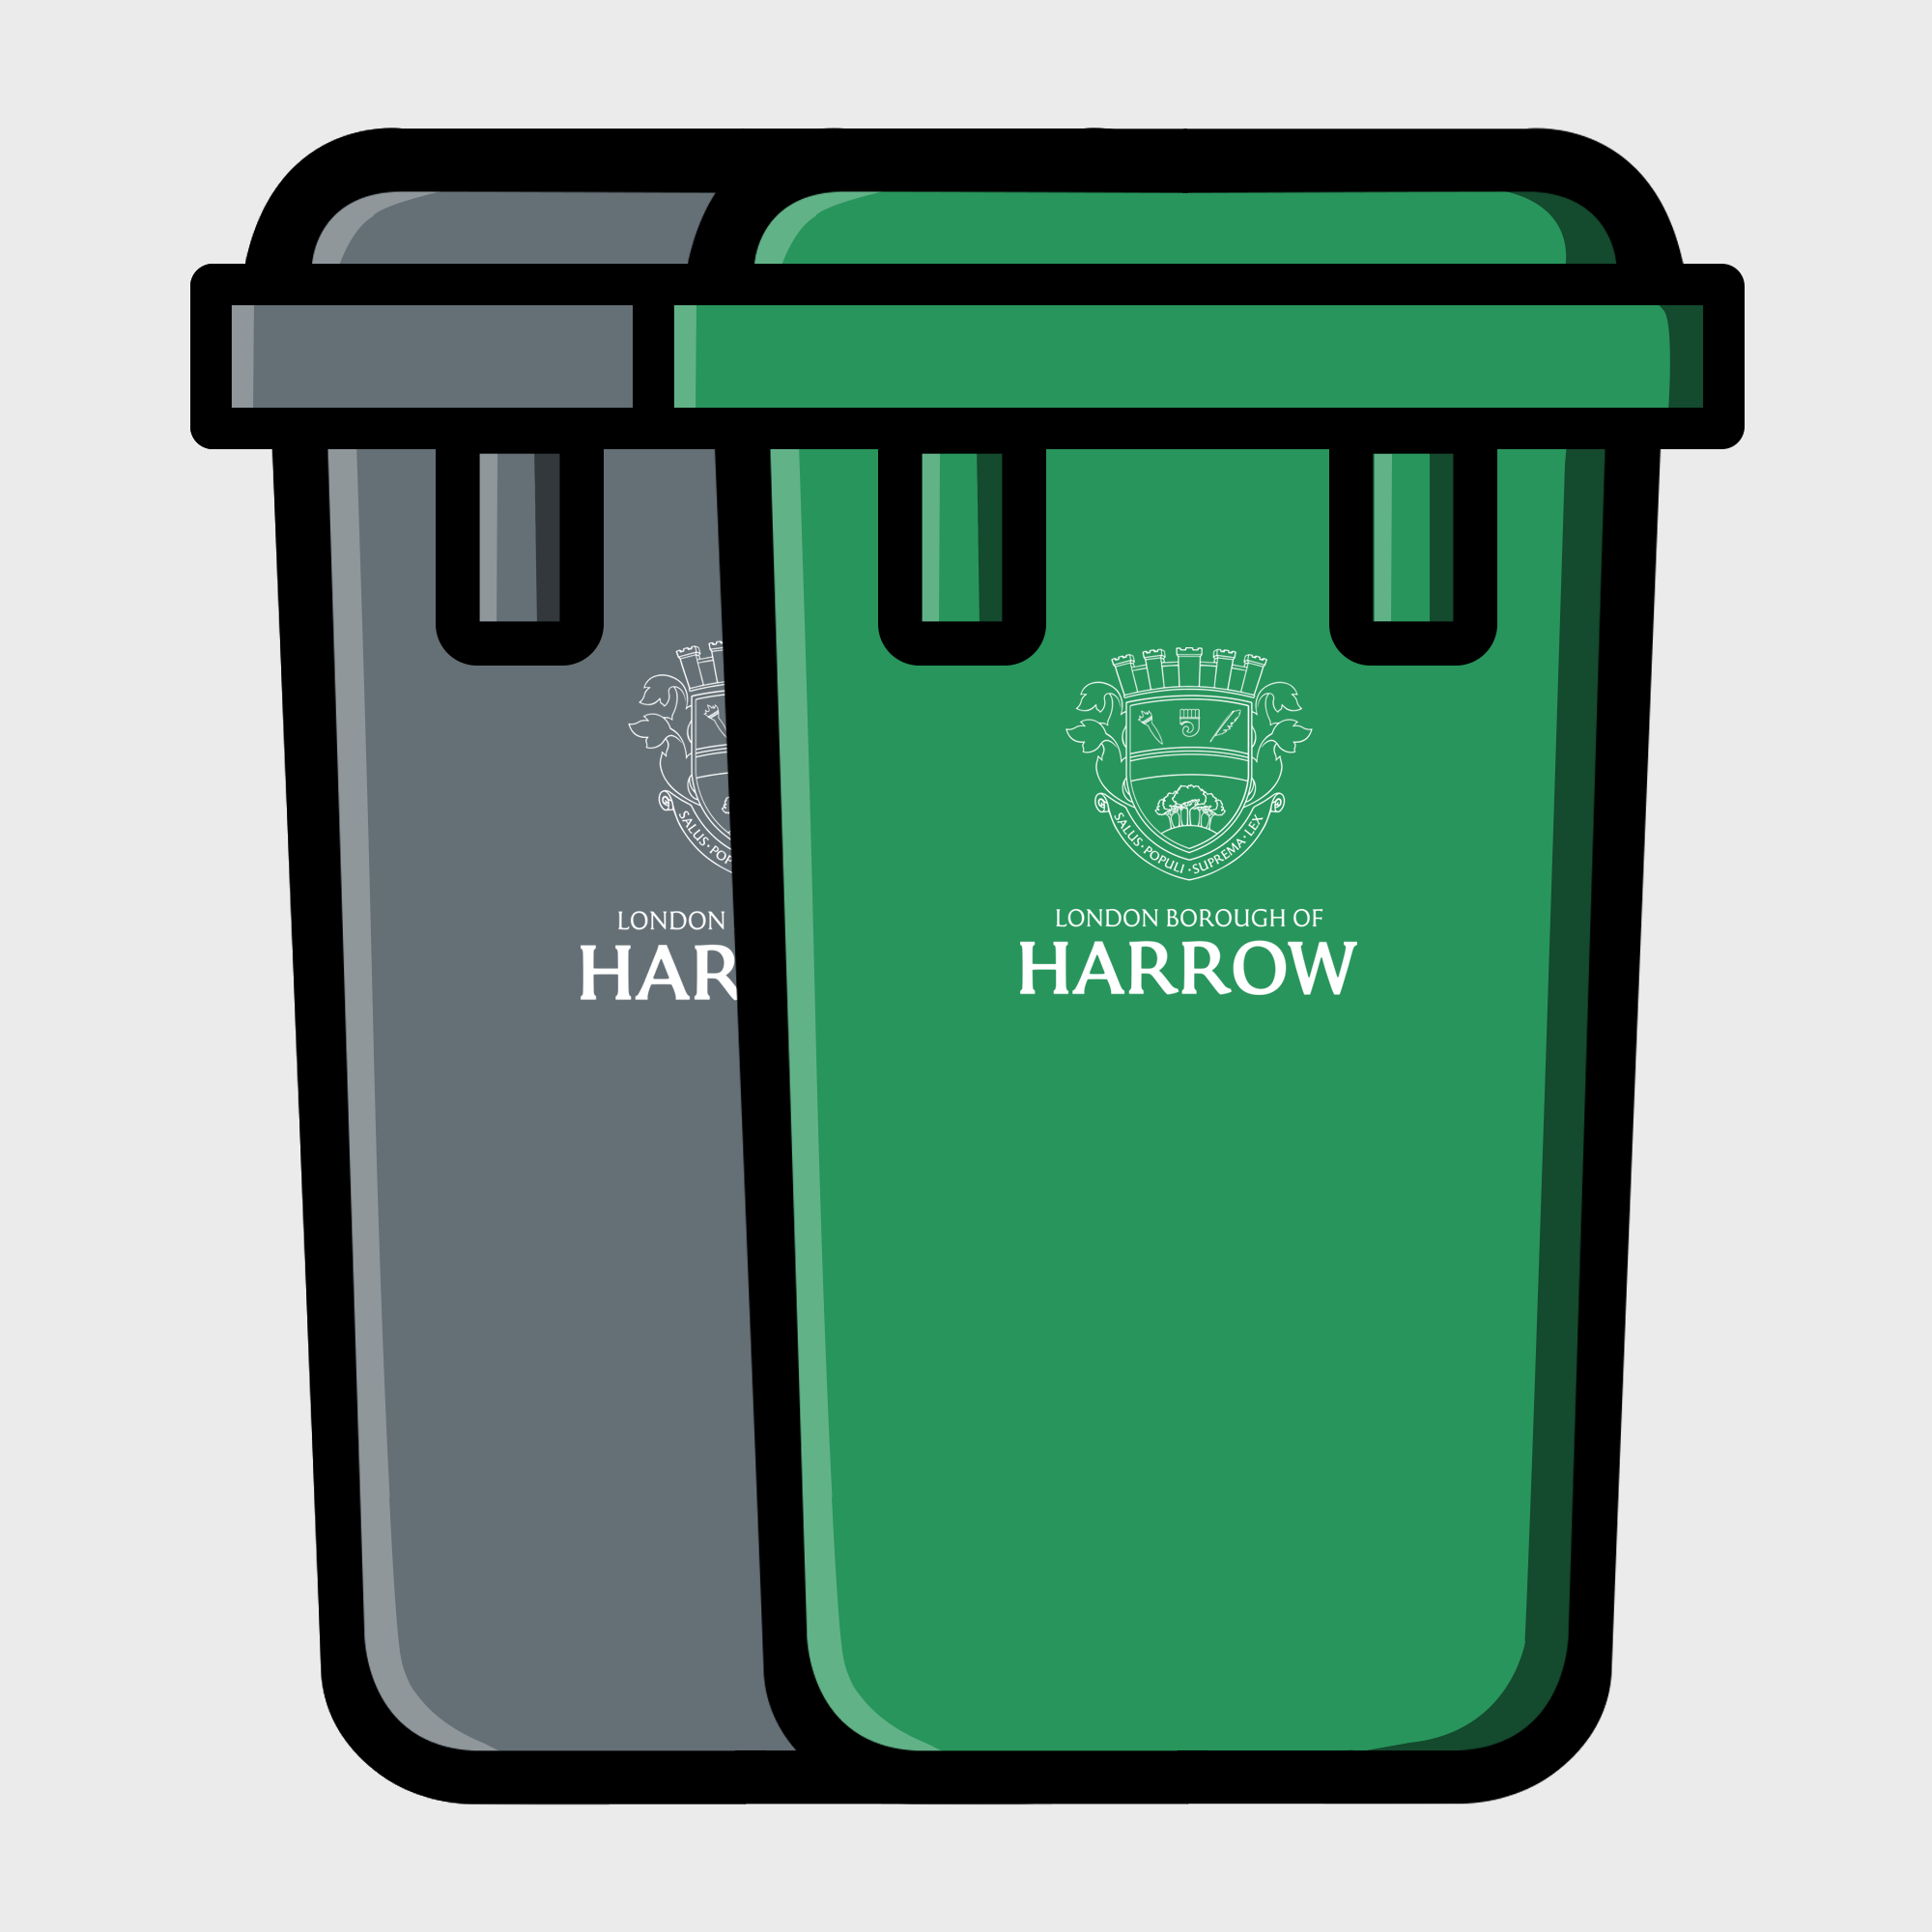 Large general waste bin icon